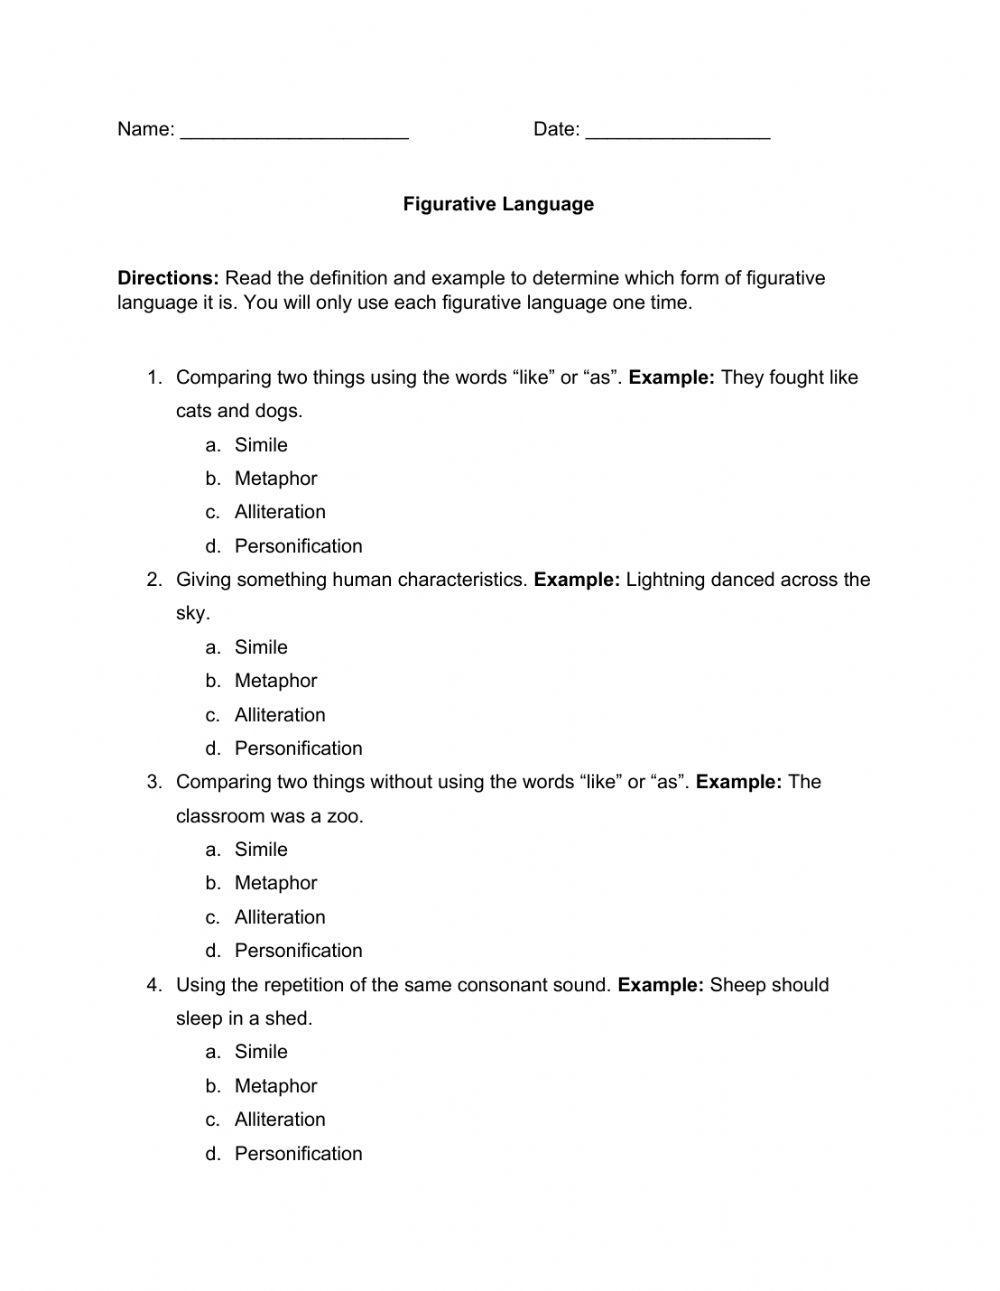 Figurative Language Mini Assessment